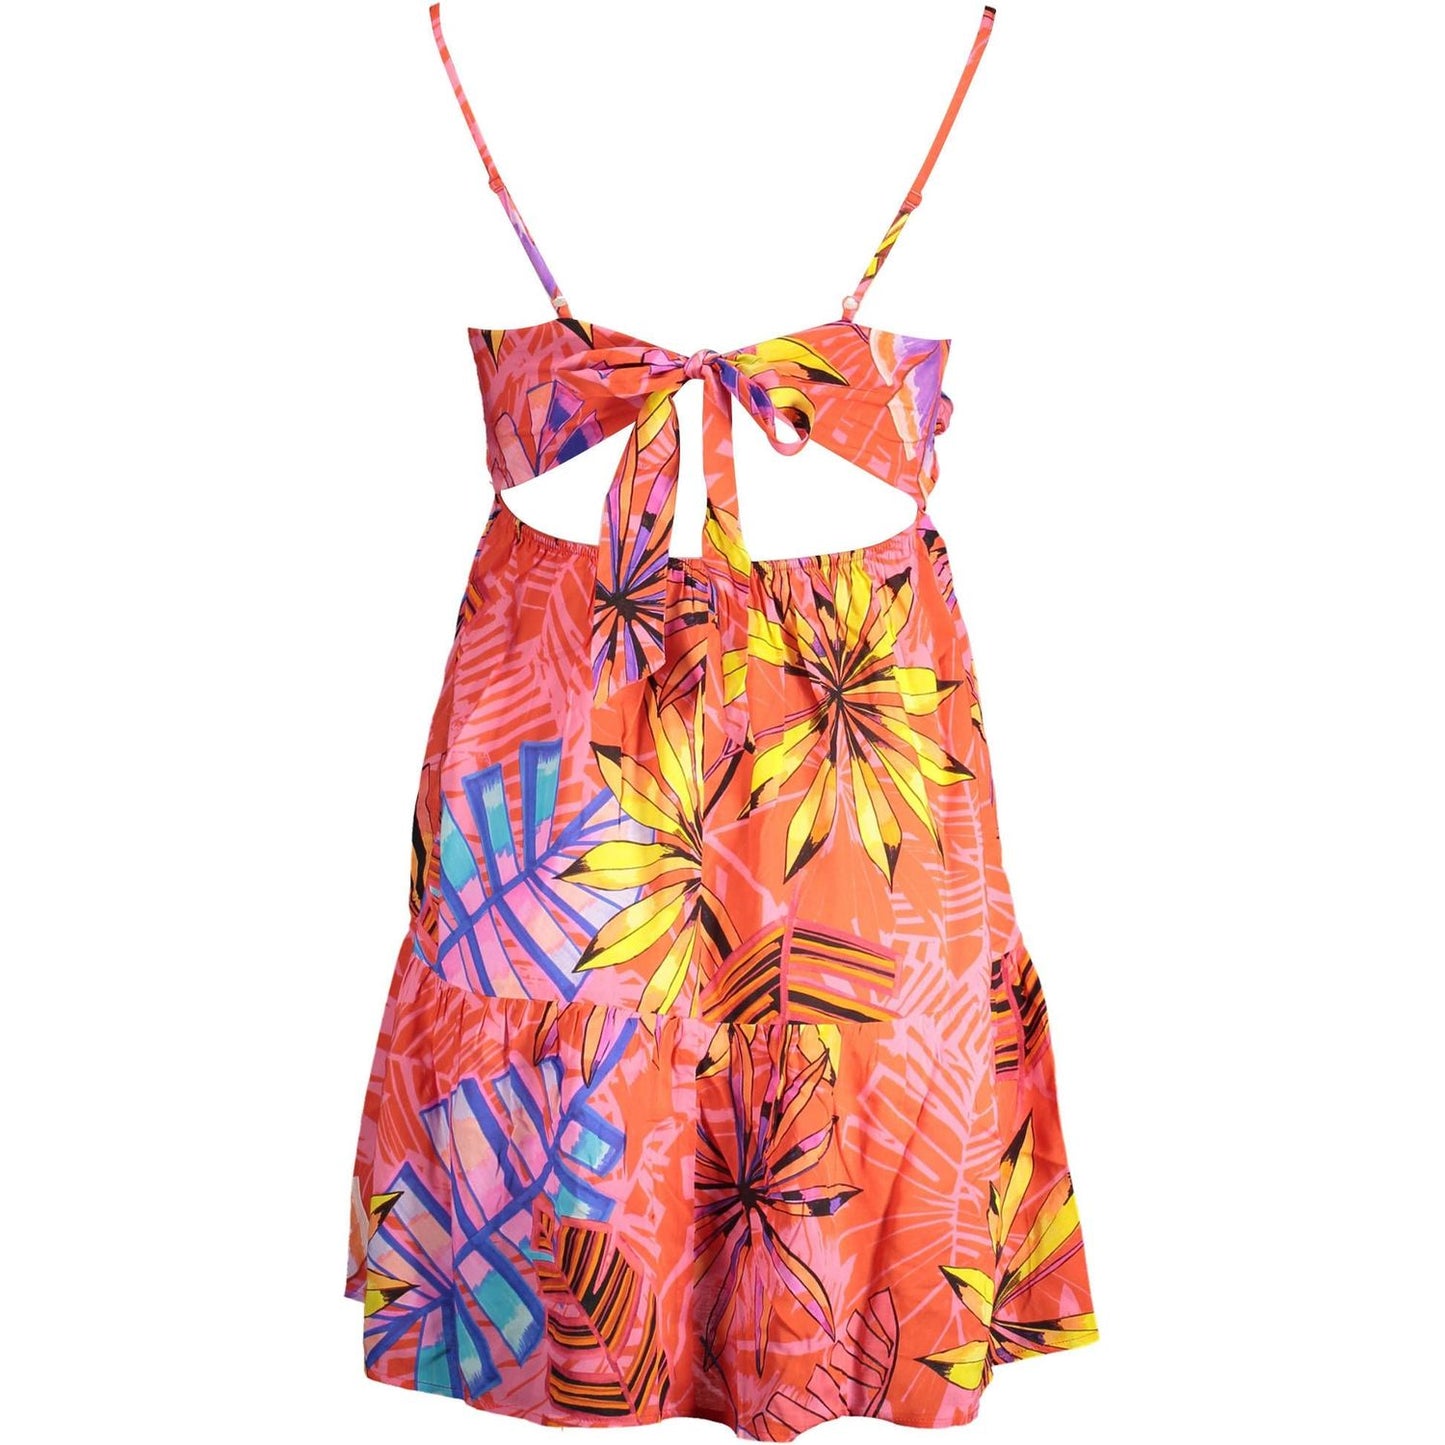 Desigual Radiant Pink Summer Dress with Delicate Details radiant-pink-summer-dress-with-delicate-details